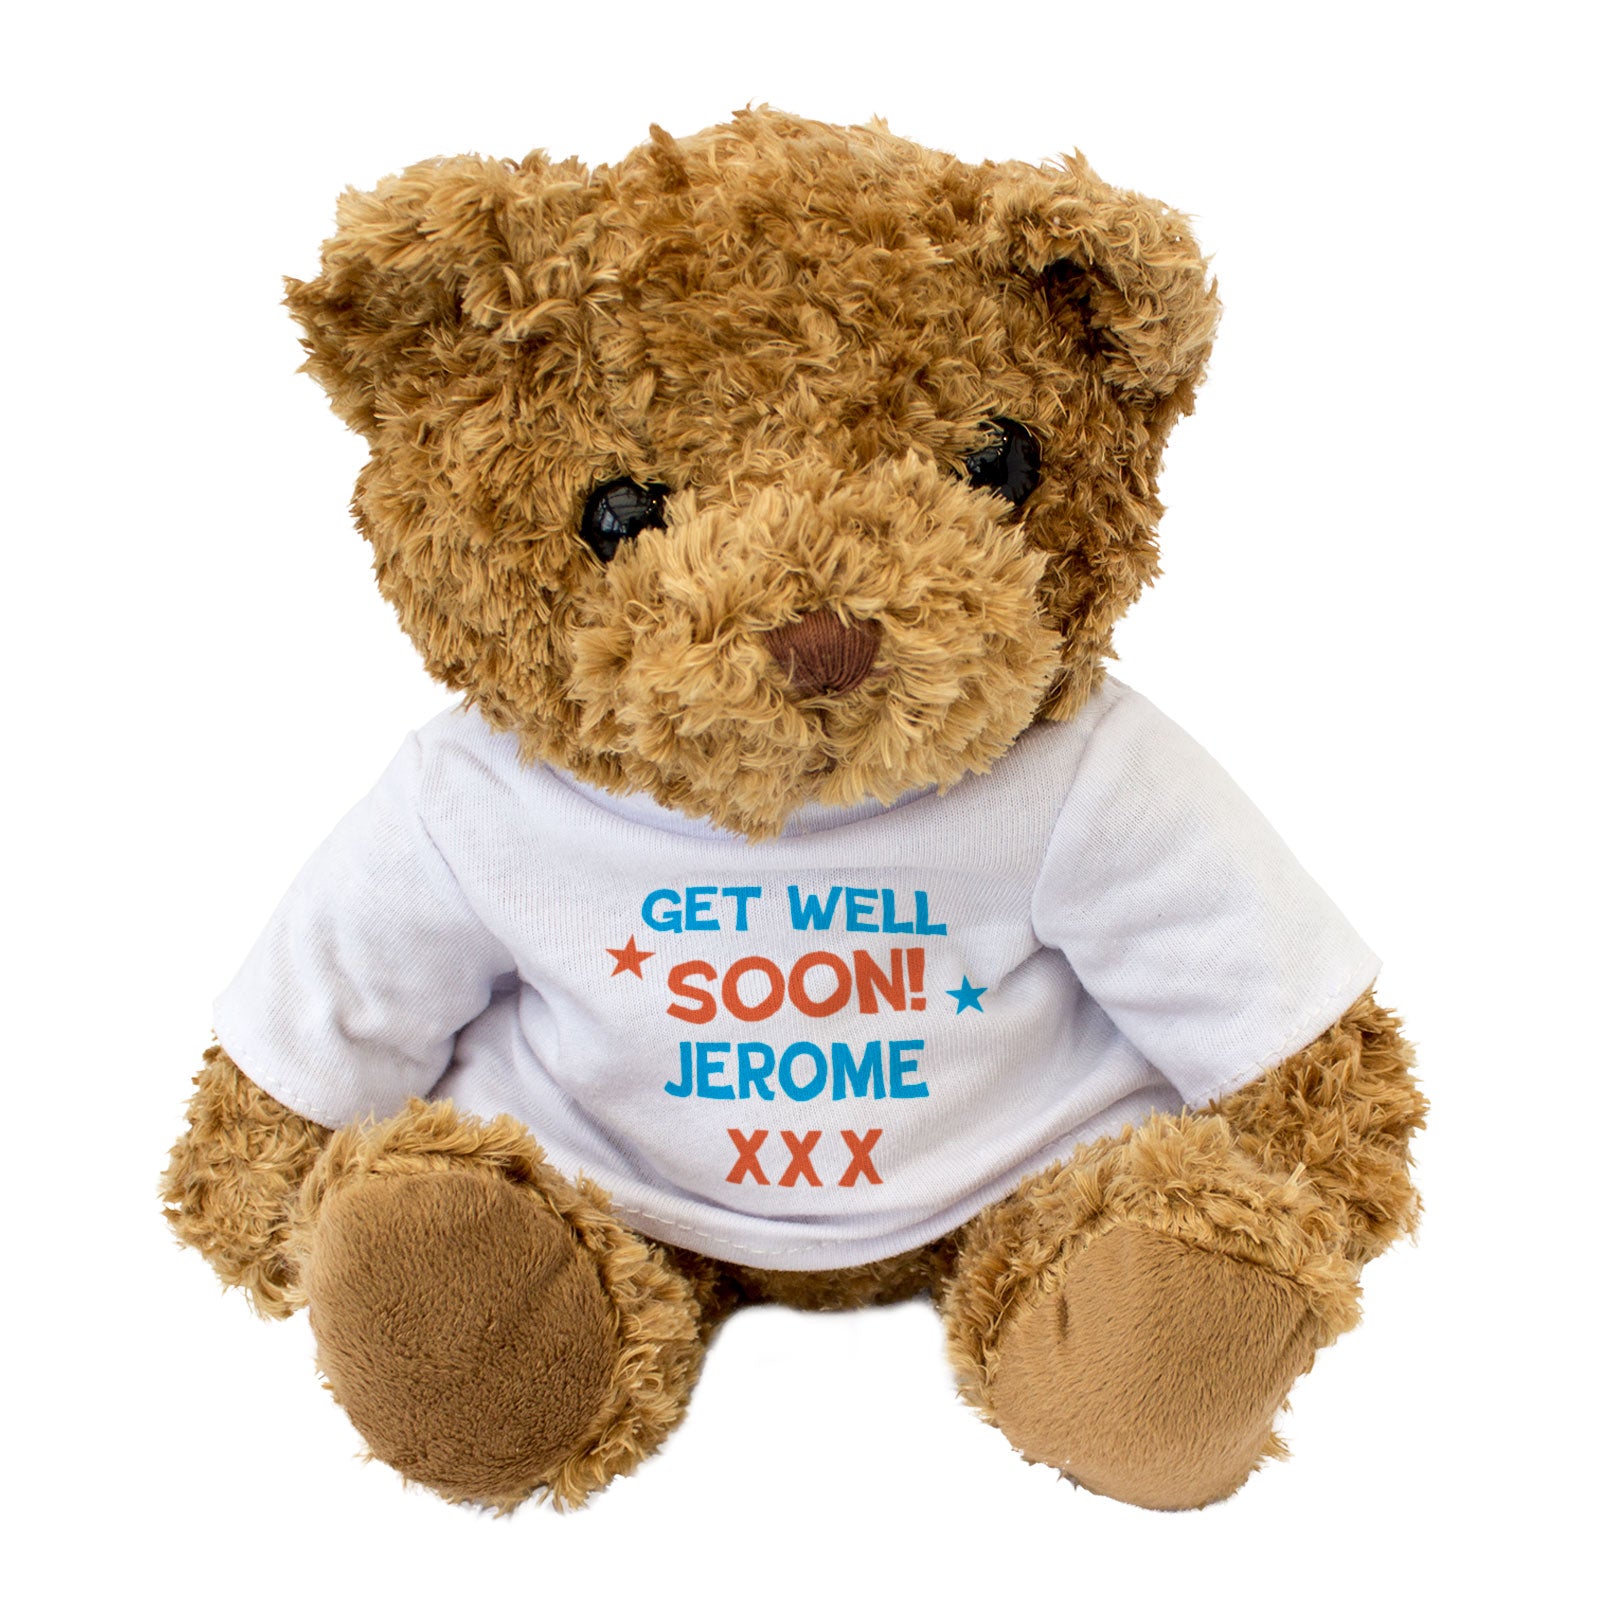 Get Well Soon Jerome - Teddy Bear